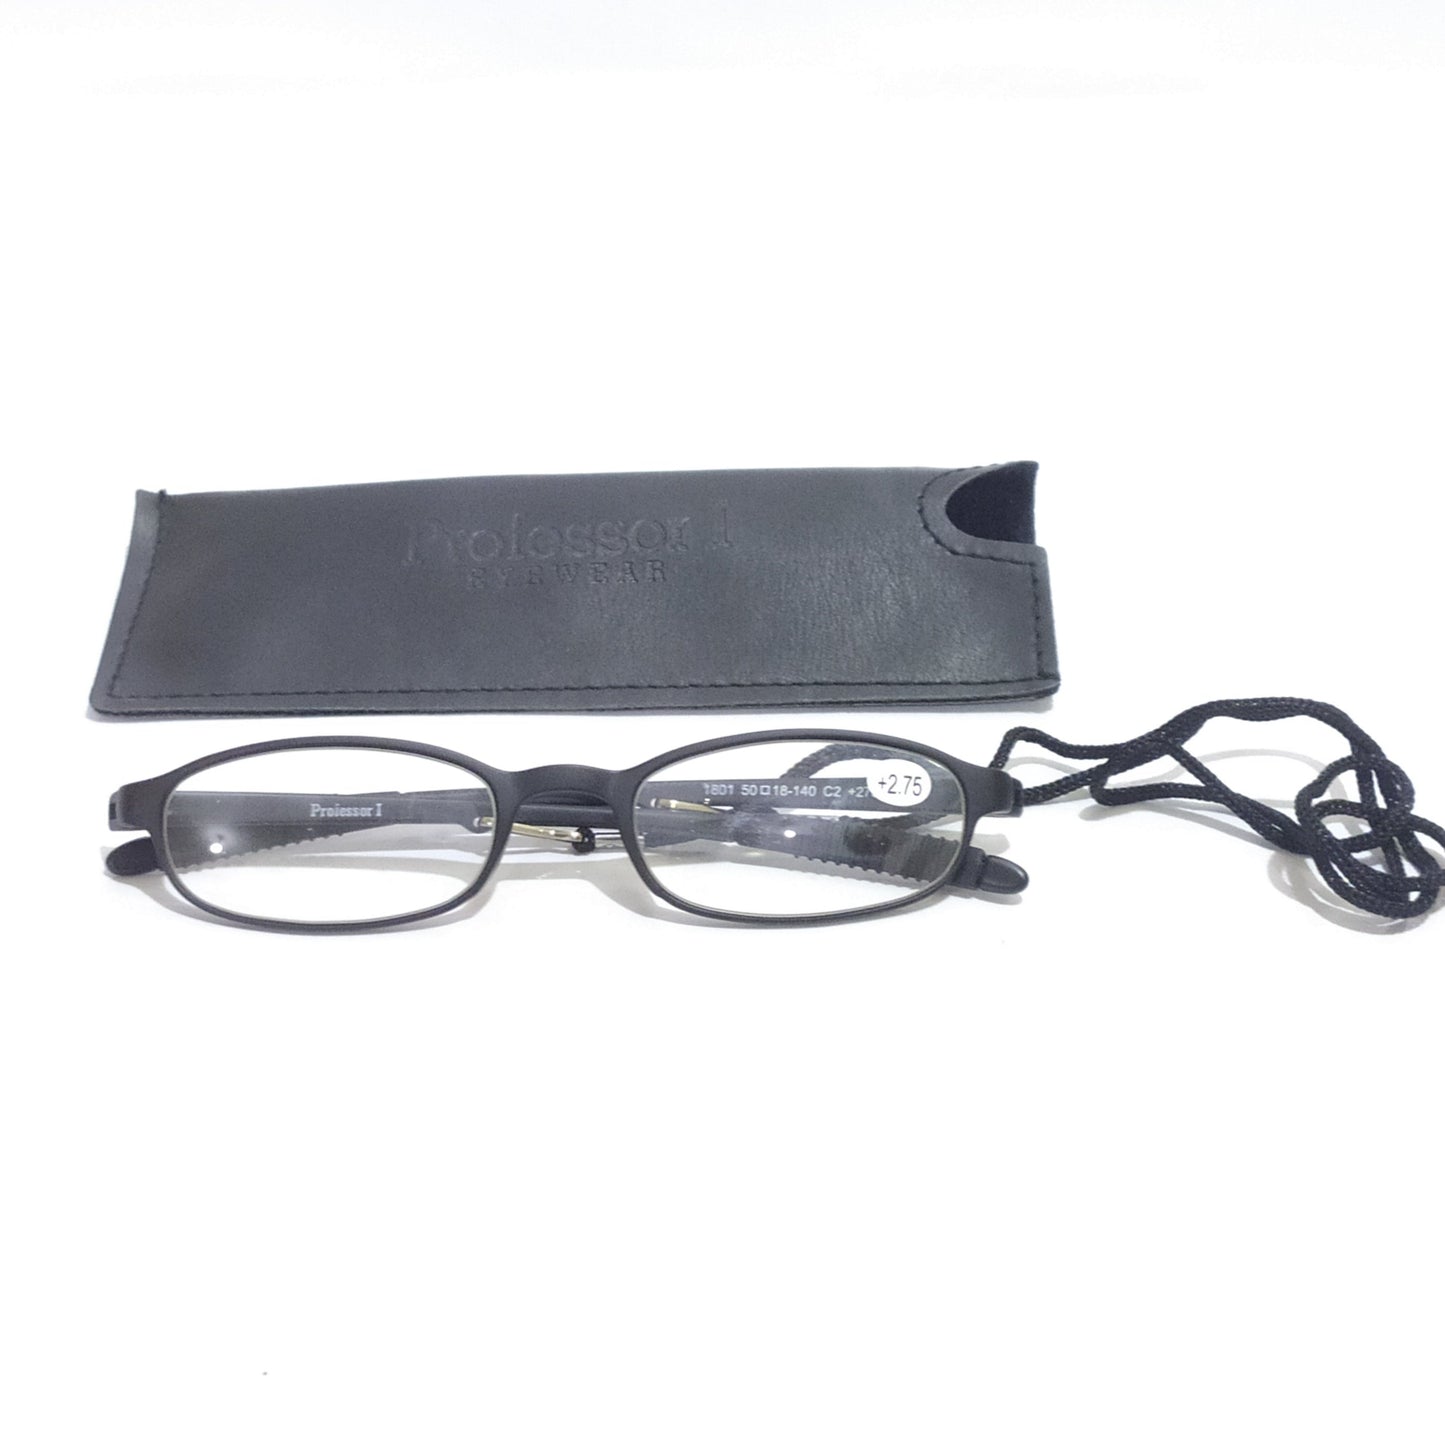 Flexible Memory Reading Glasses for Men and Women - Grey Oval TR90 Frames